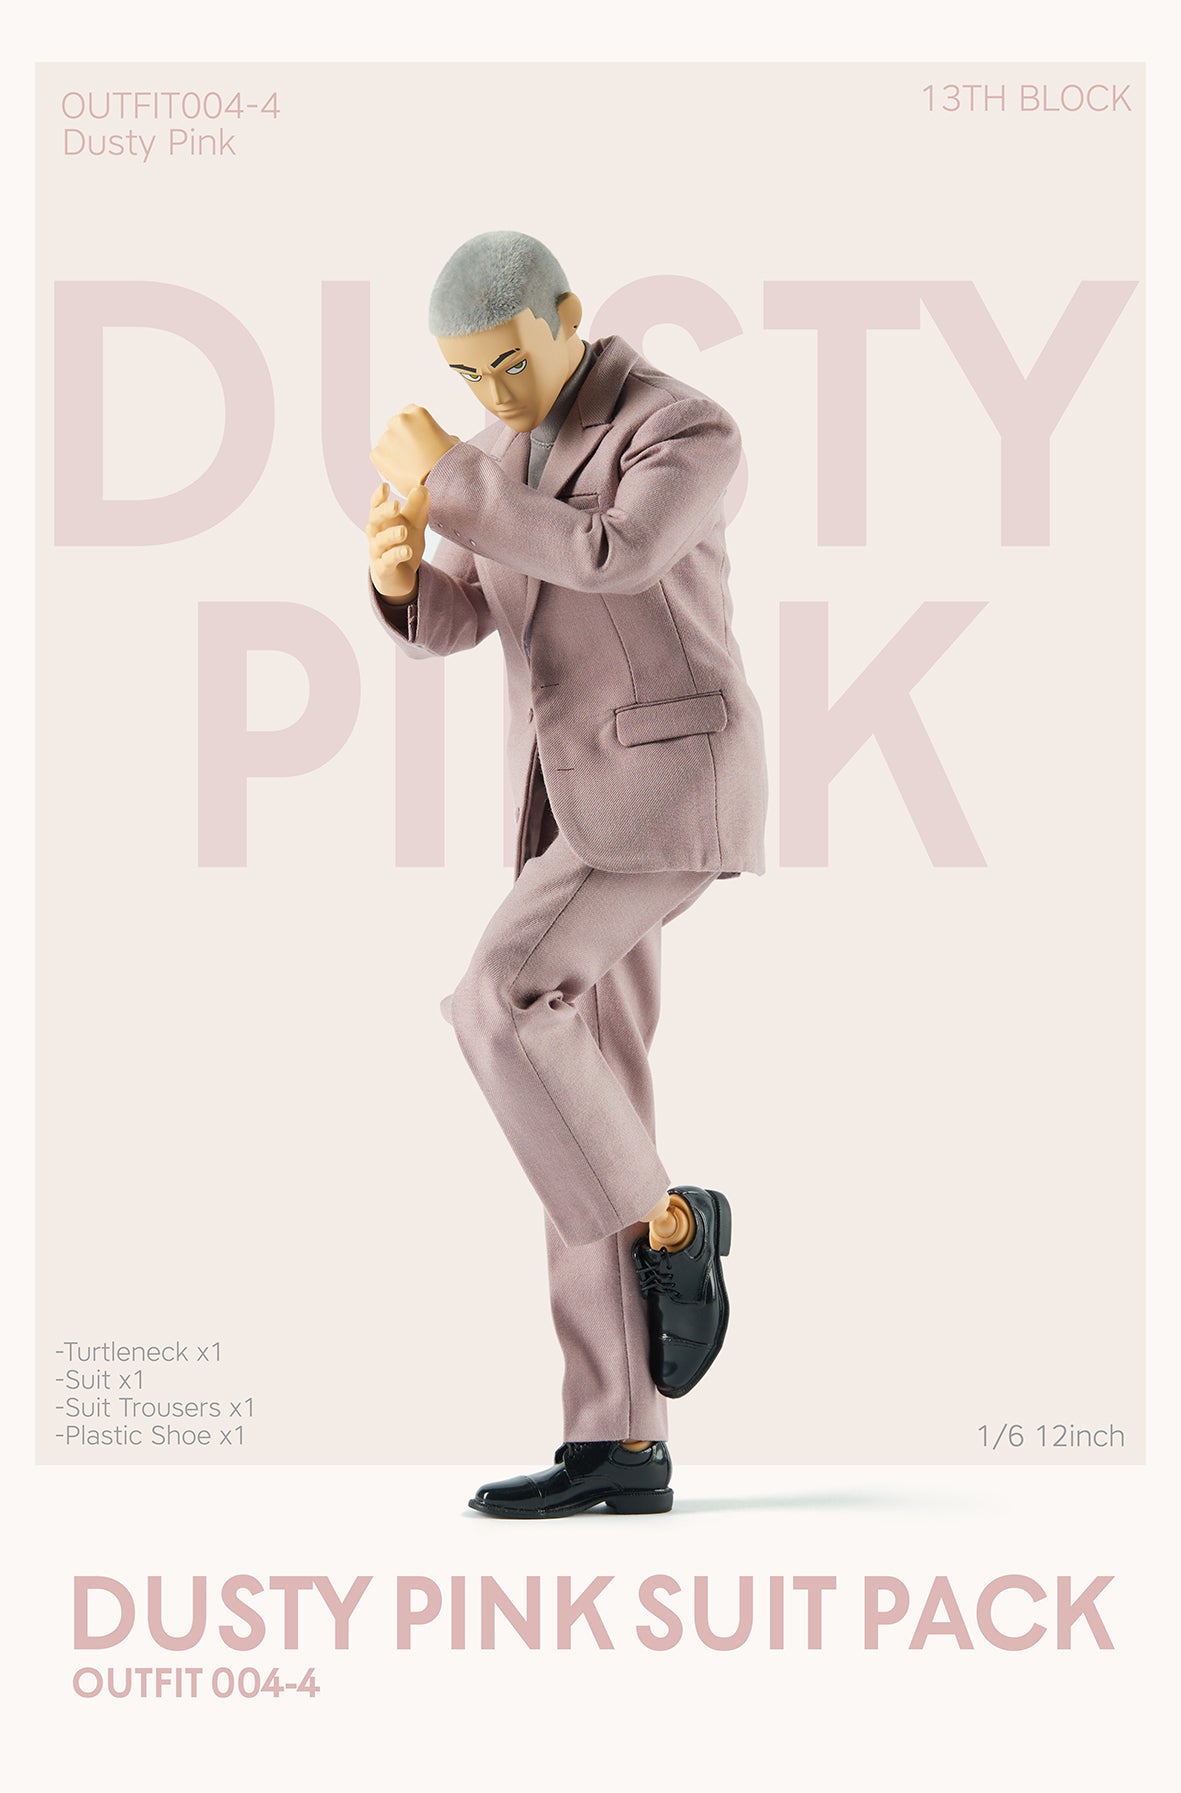 Outfit 004-4/5/6 Morandi suit pack